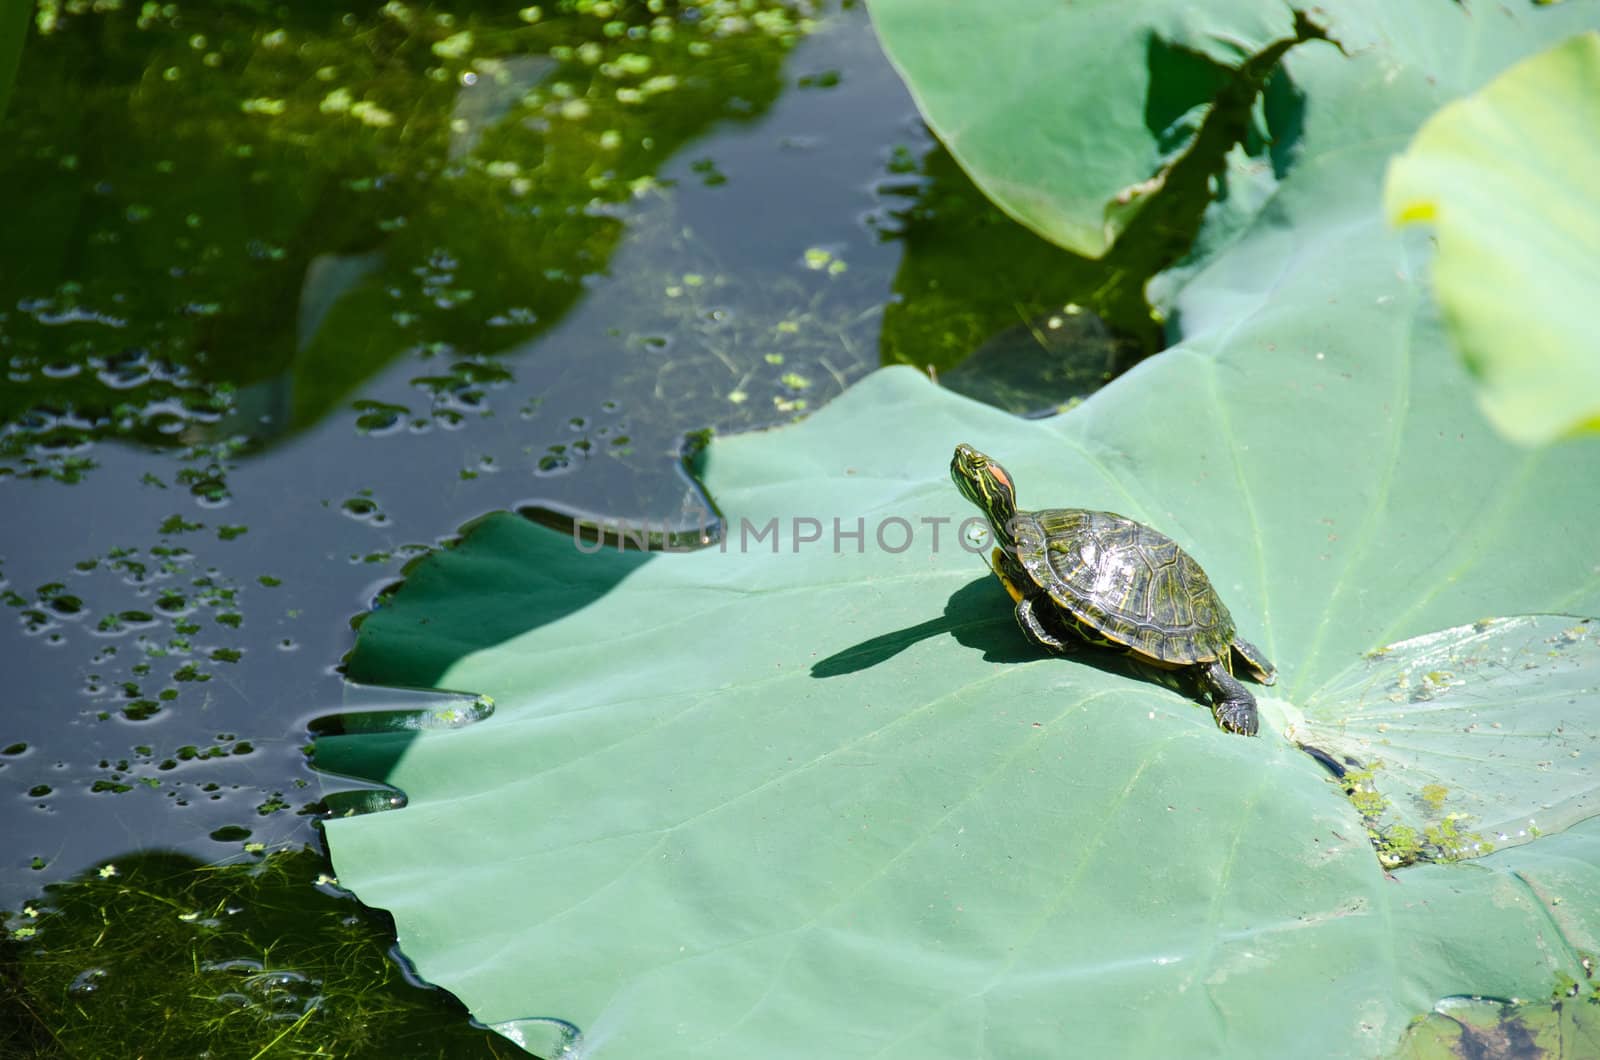 Red-eared slider turtle, Trachemys scripta elegans, sunbathing on a lotus leaf